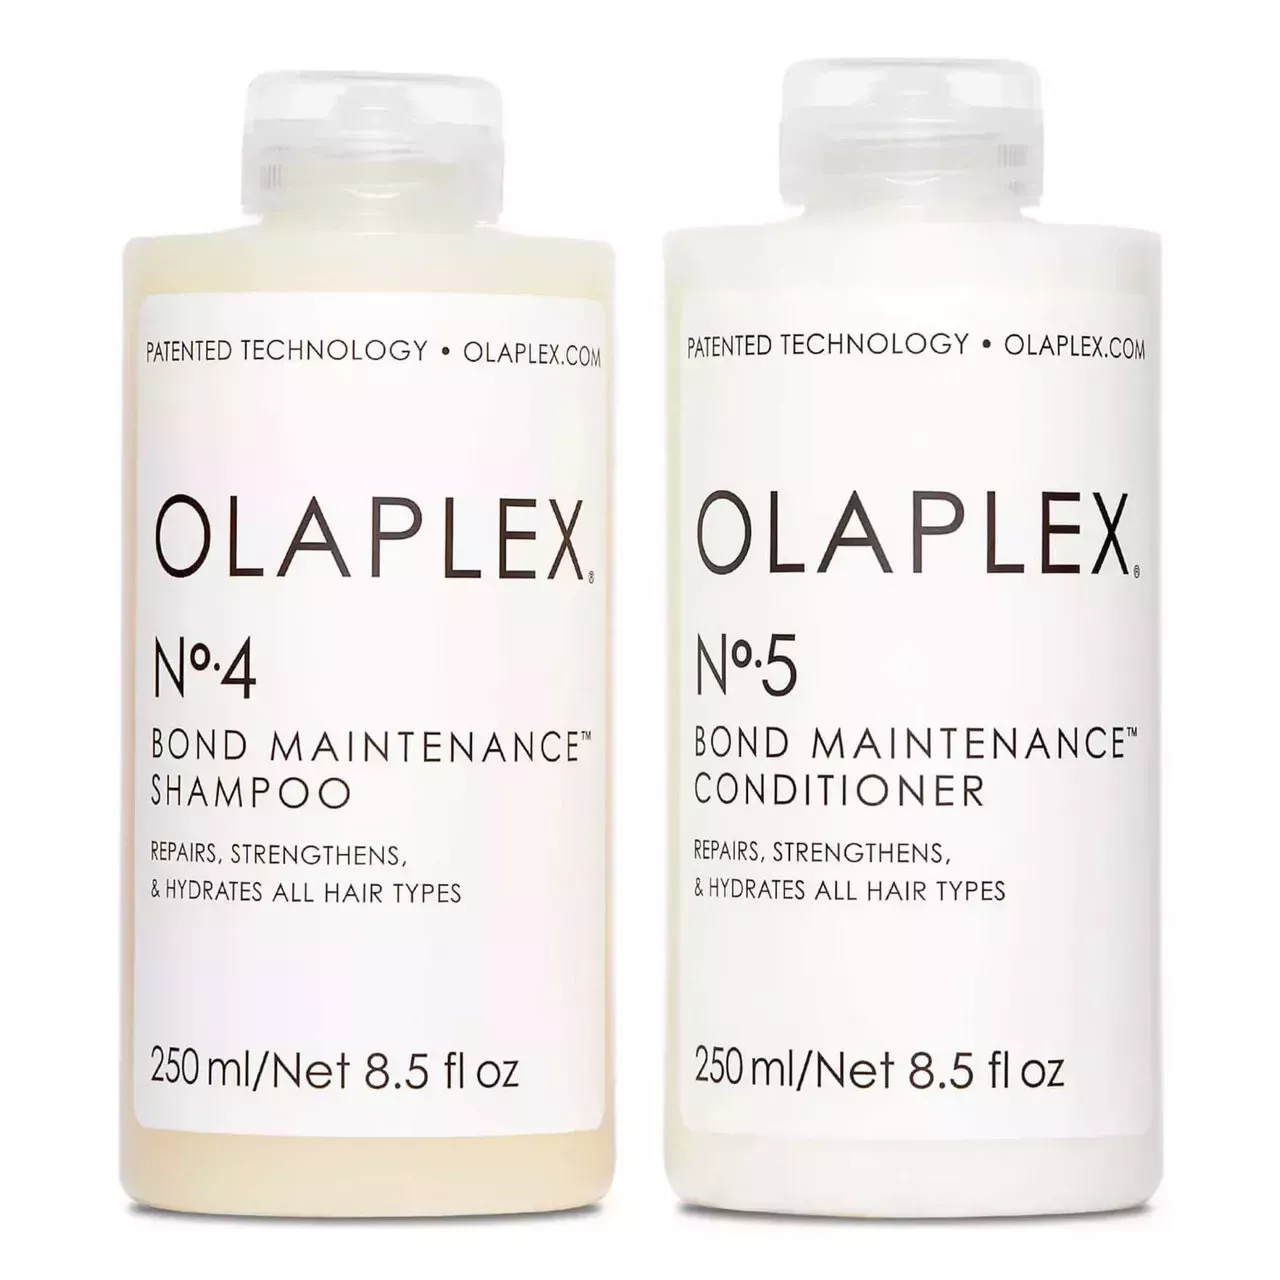 Olaplex Shampoo and Conditioner Bundle two white bottles of champú and conditioner on white background